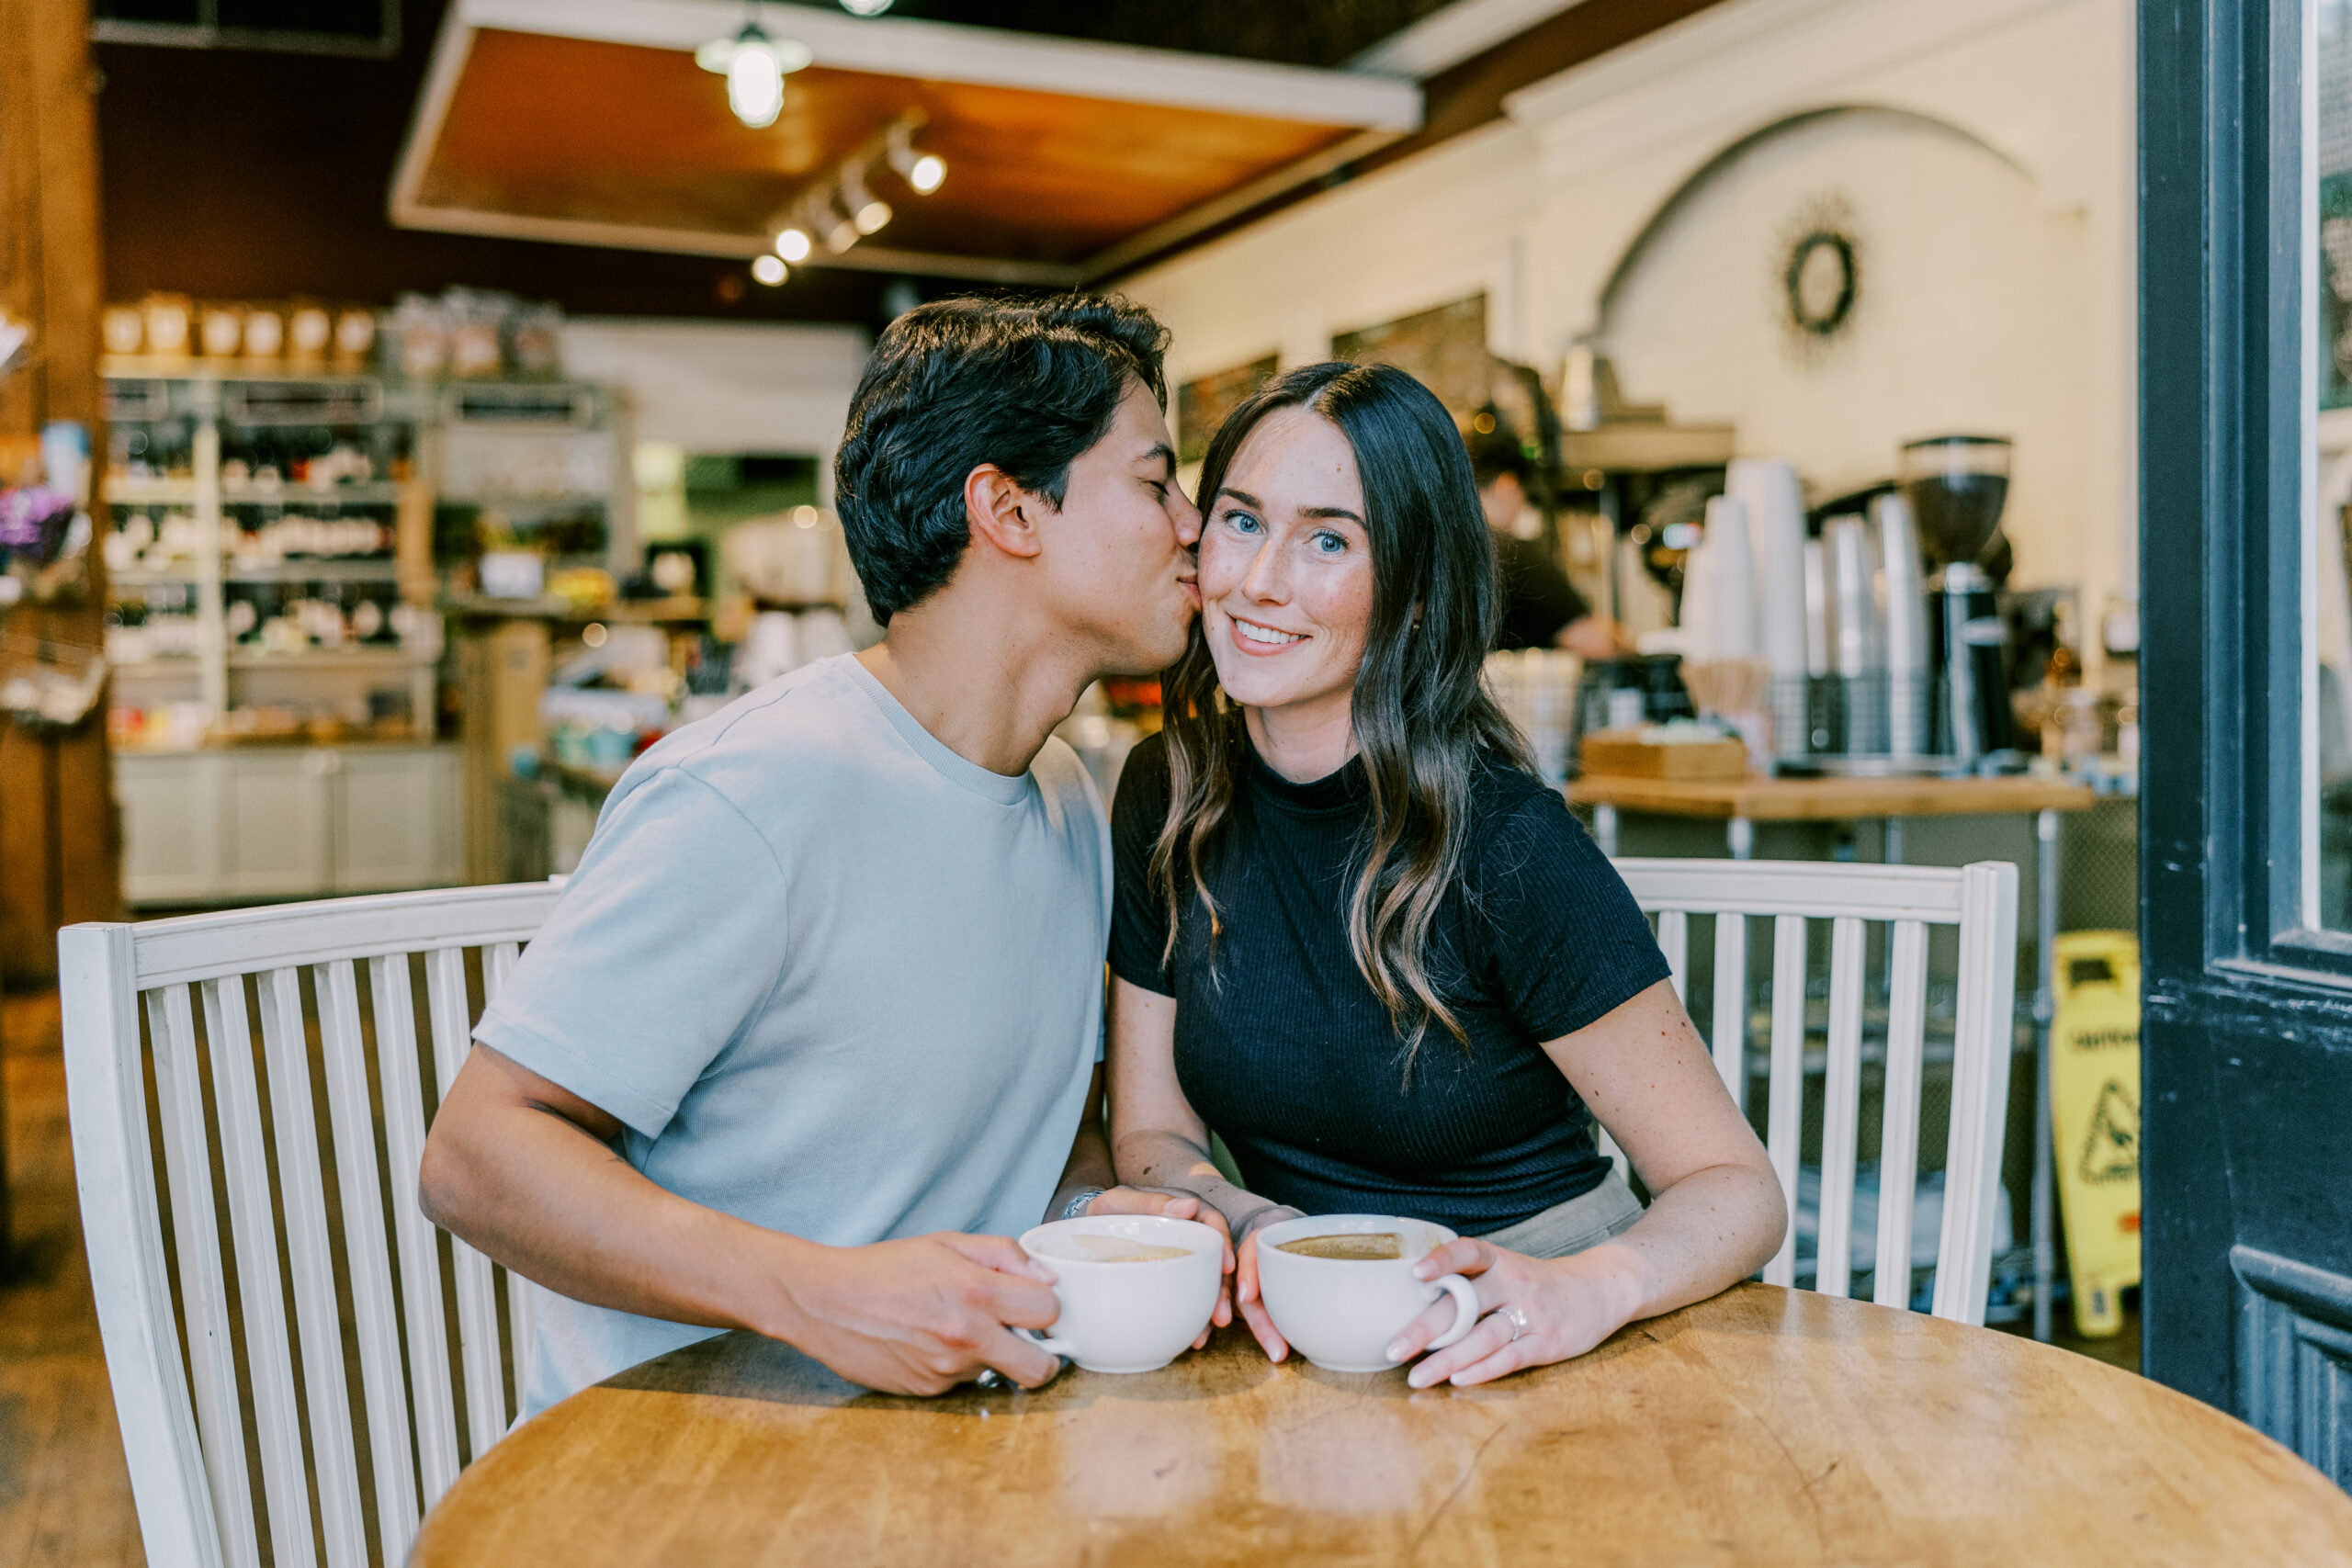 Man and woman sitting at table, man kisses woman on cheek as she looks at camera smiling